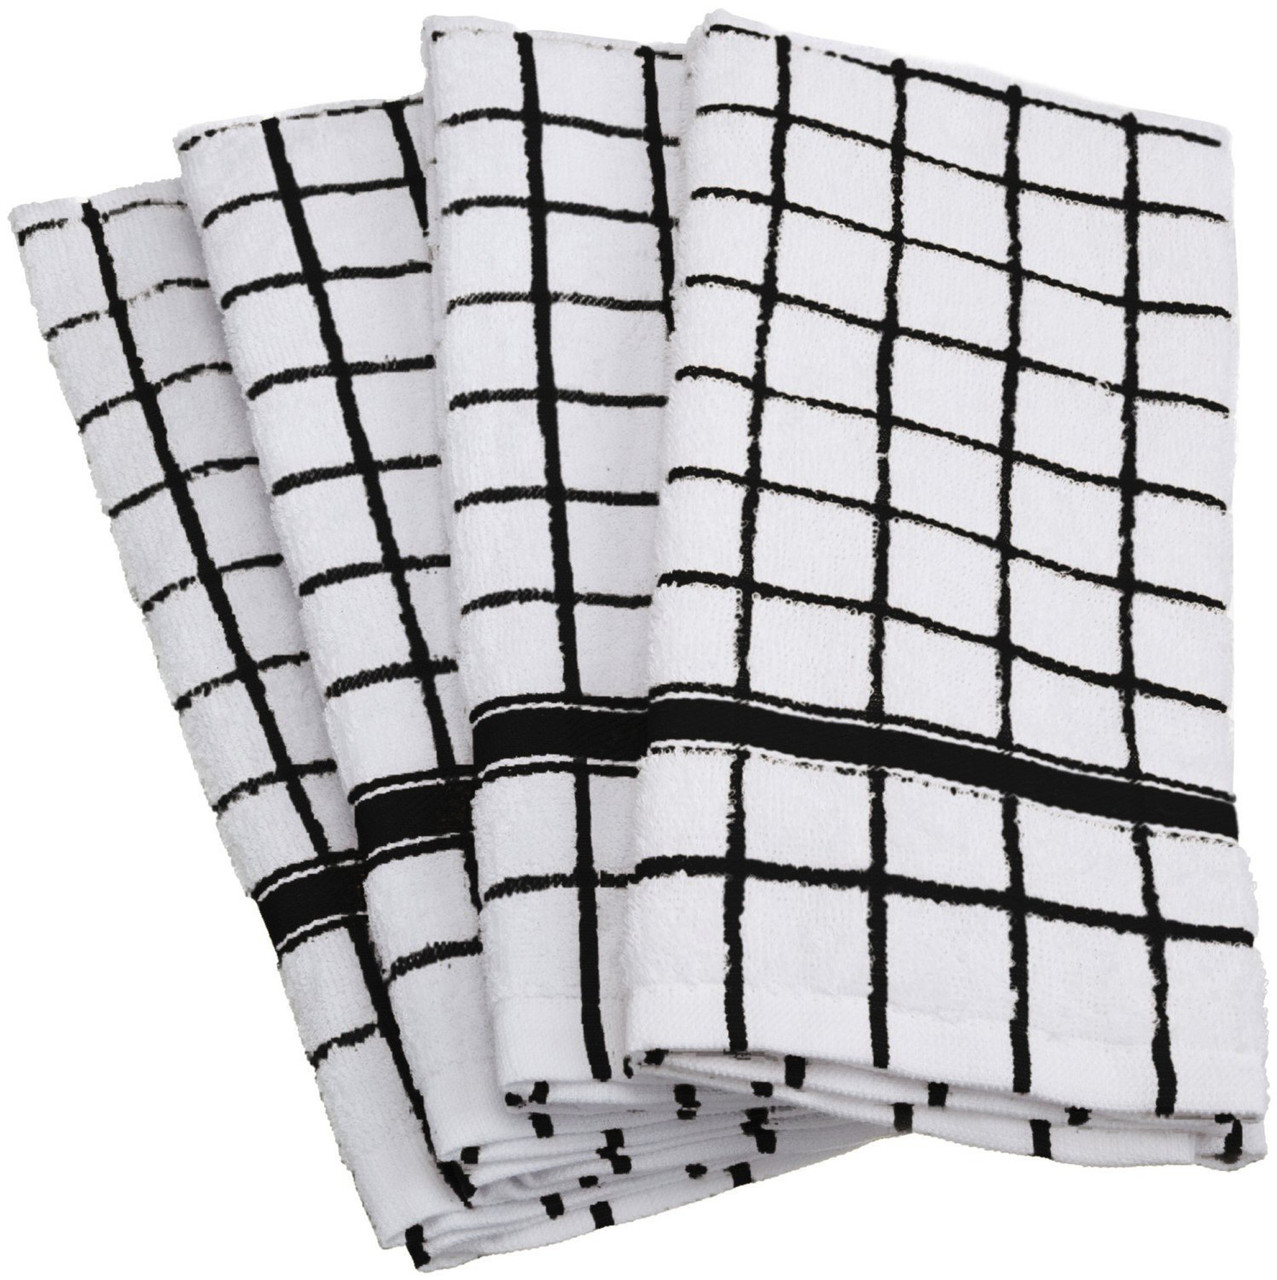 Set of 4 Black and White Windowpane Checkered Terry Dishtowels 15 x 26”